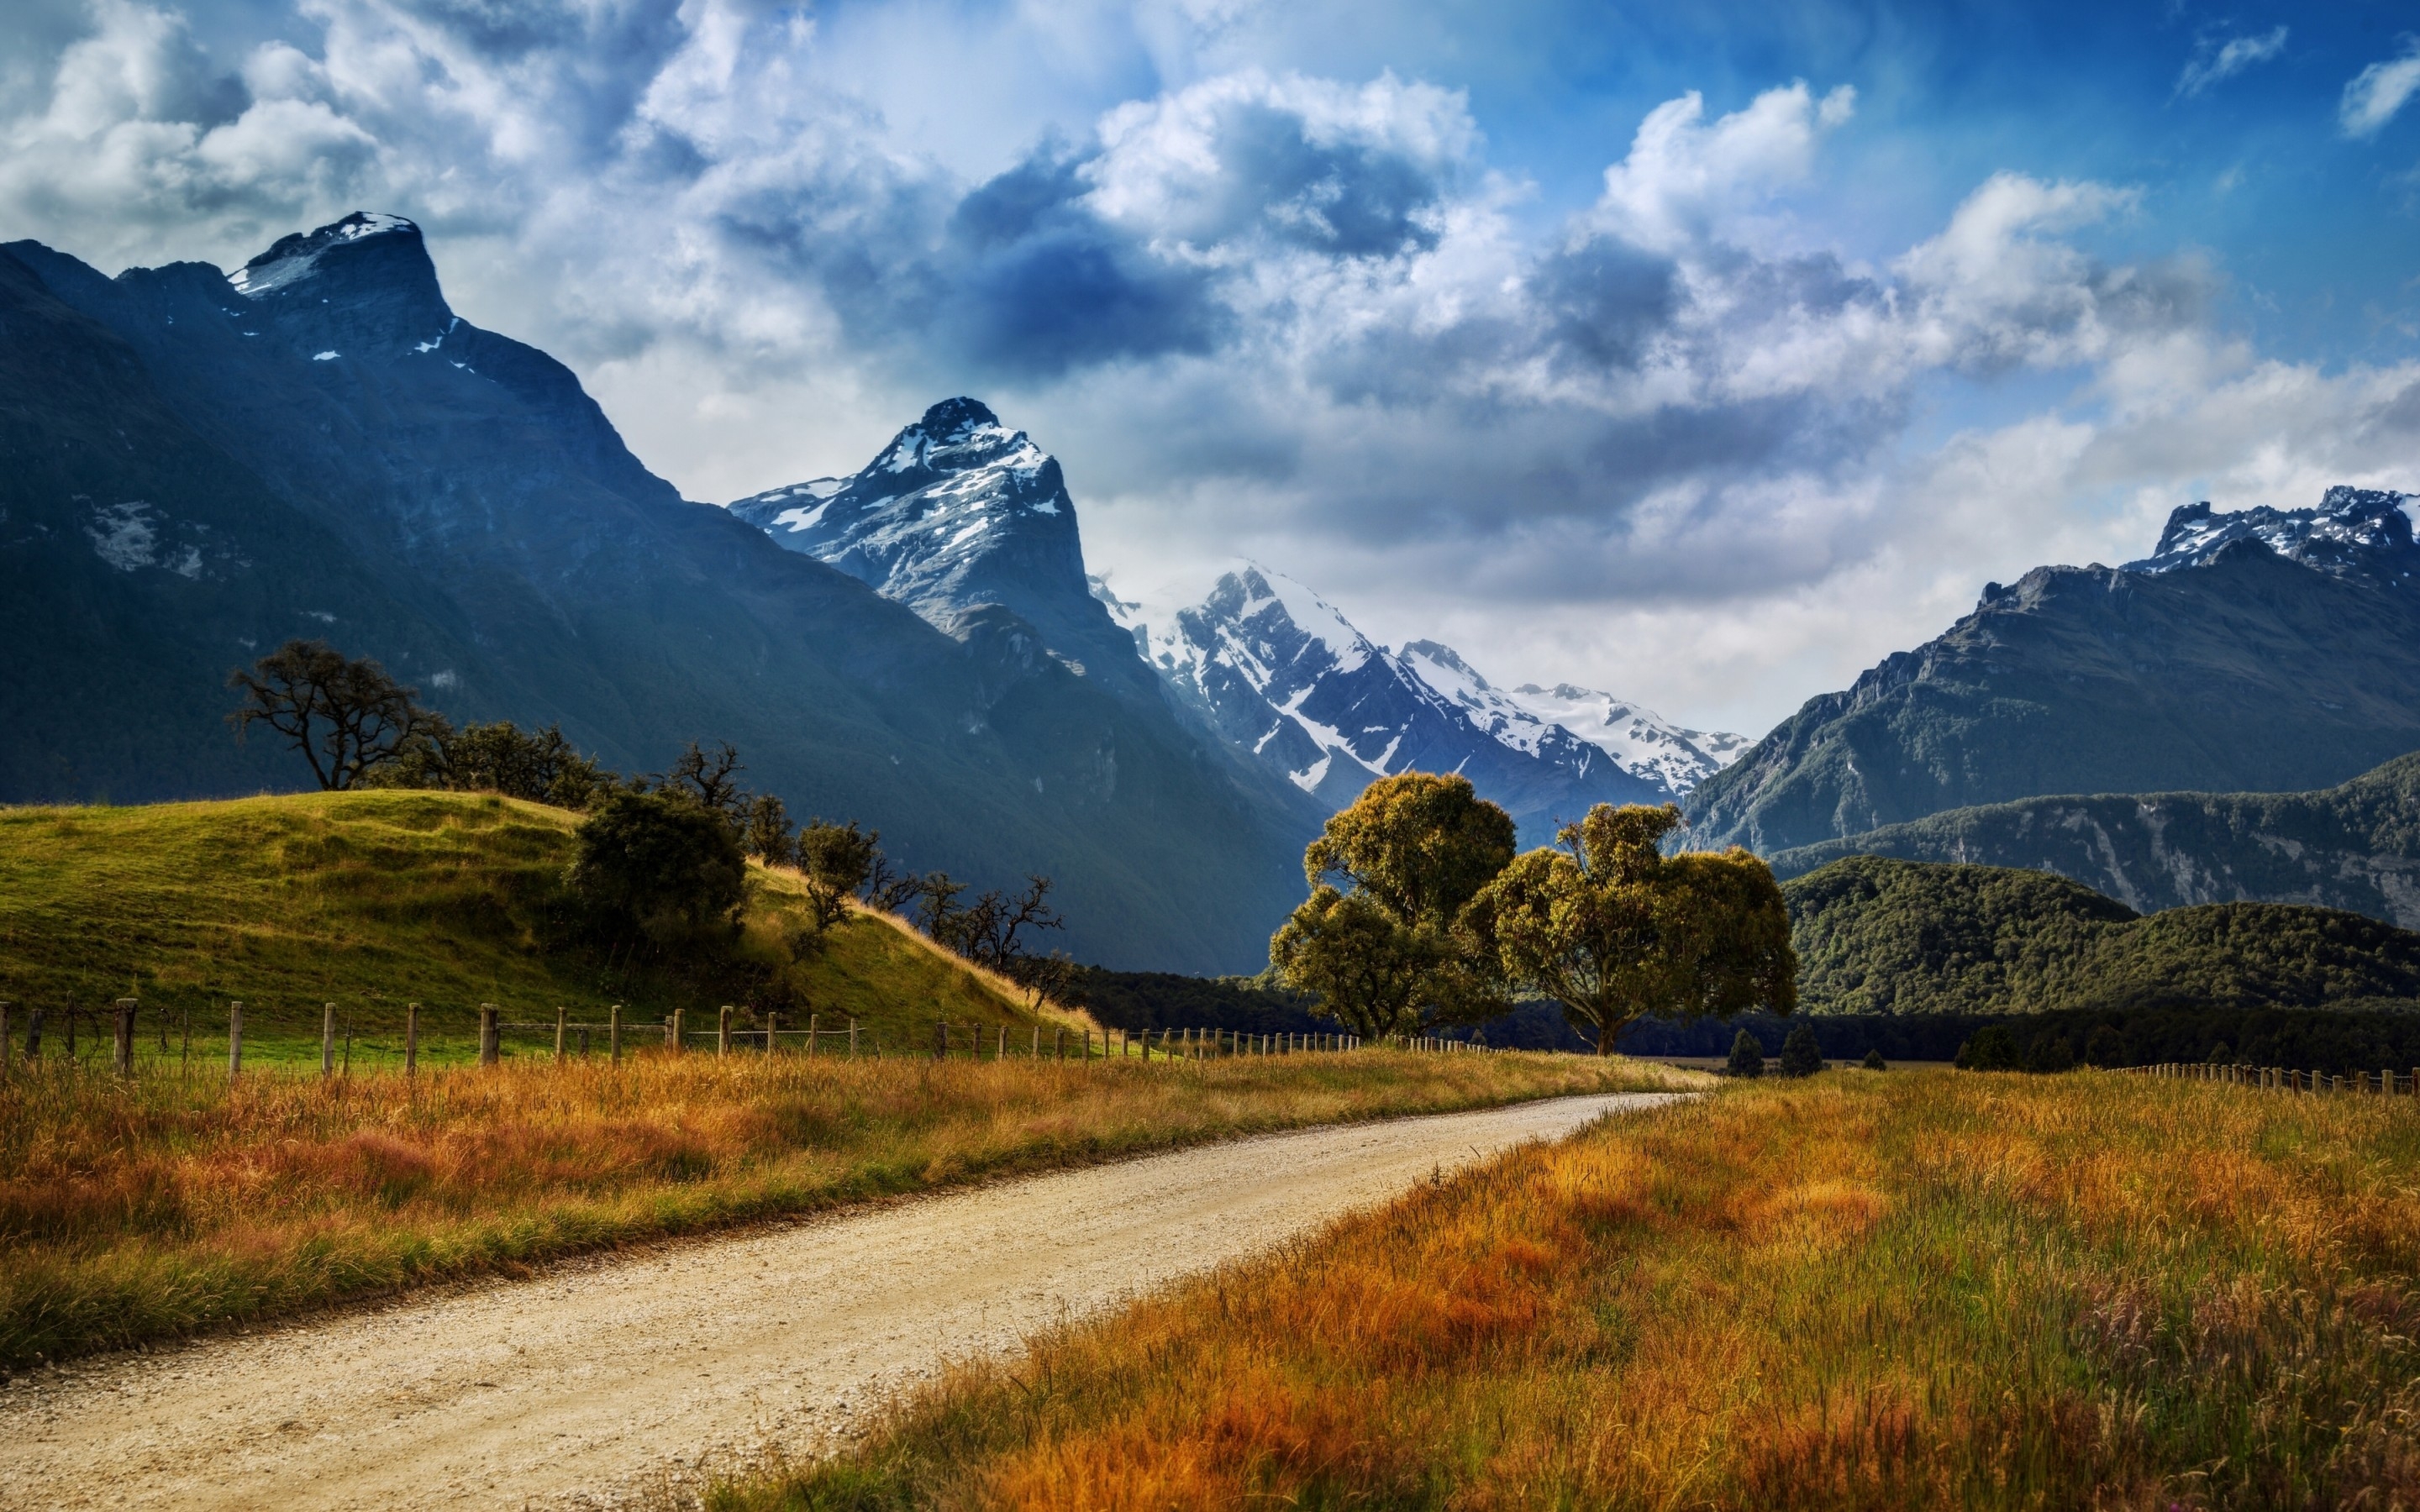 New Zealand Summer Landscape for 2880 x 1800 Retina Display resolution